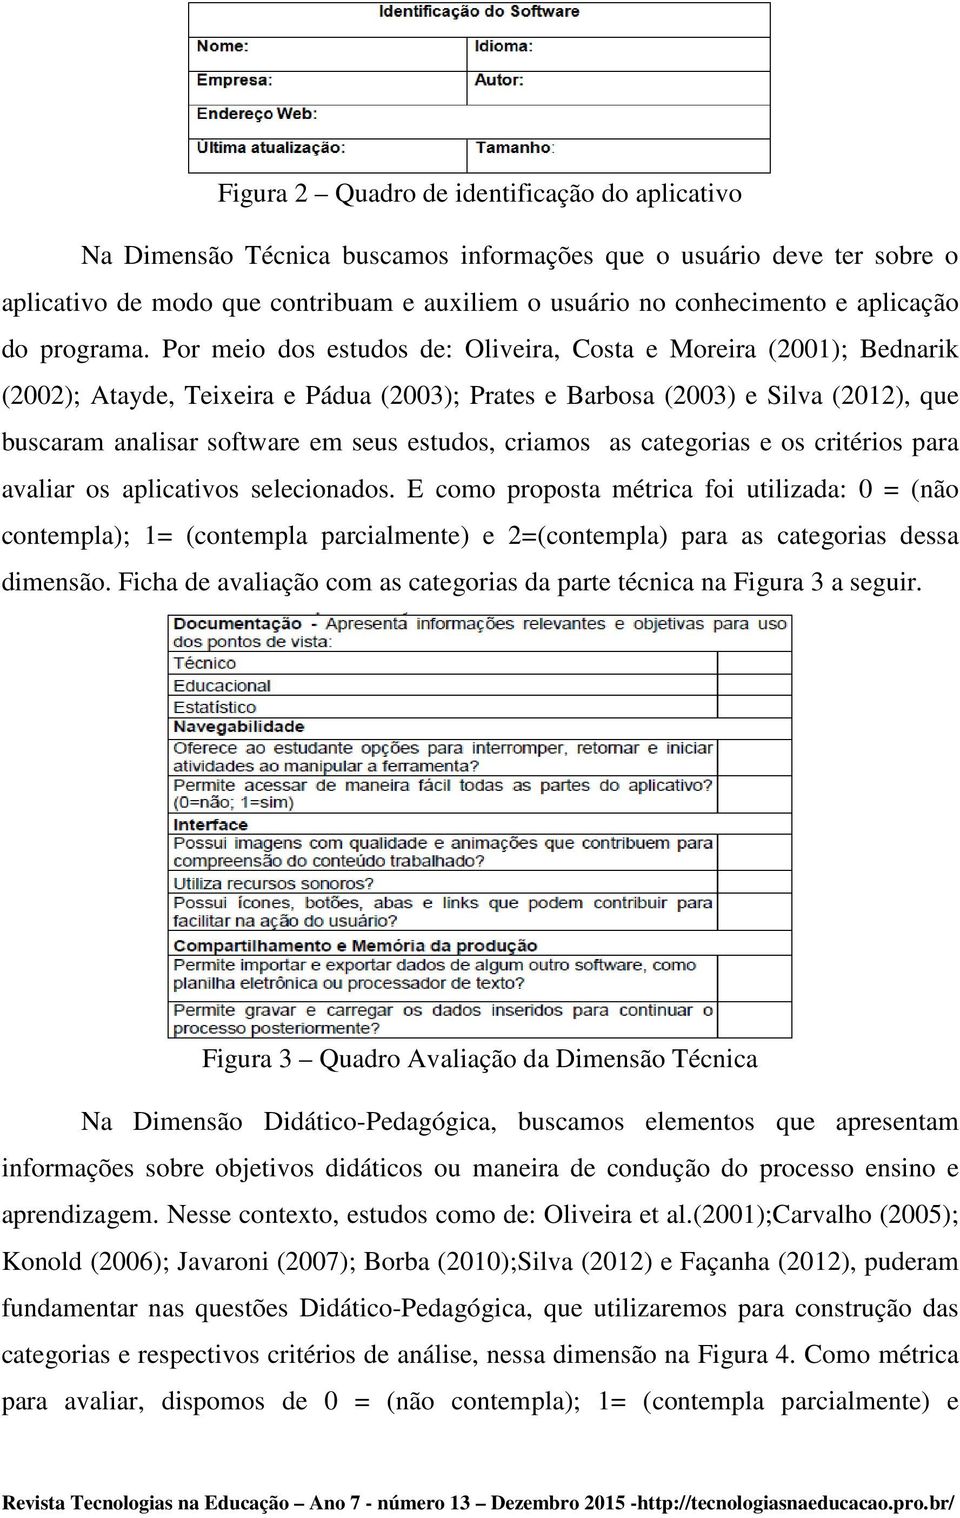 Por meio dos estudos de: Oliveira, Costa e Moreira (2001); Bednarik (2002); Atayde, Teixeira e Pádua (2003); Prates e Barbosa (2003) e Silva (2012), que buscaram analisar software em seus estudos,